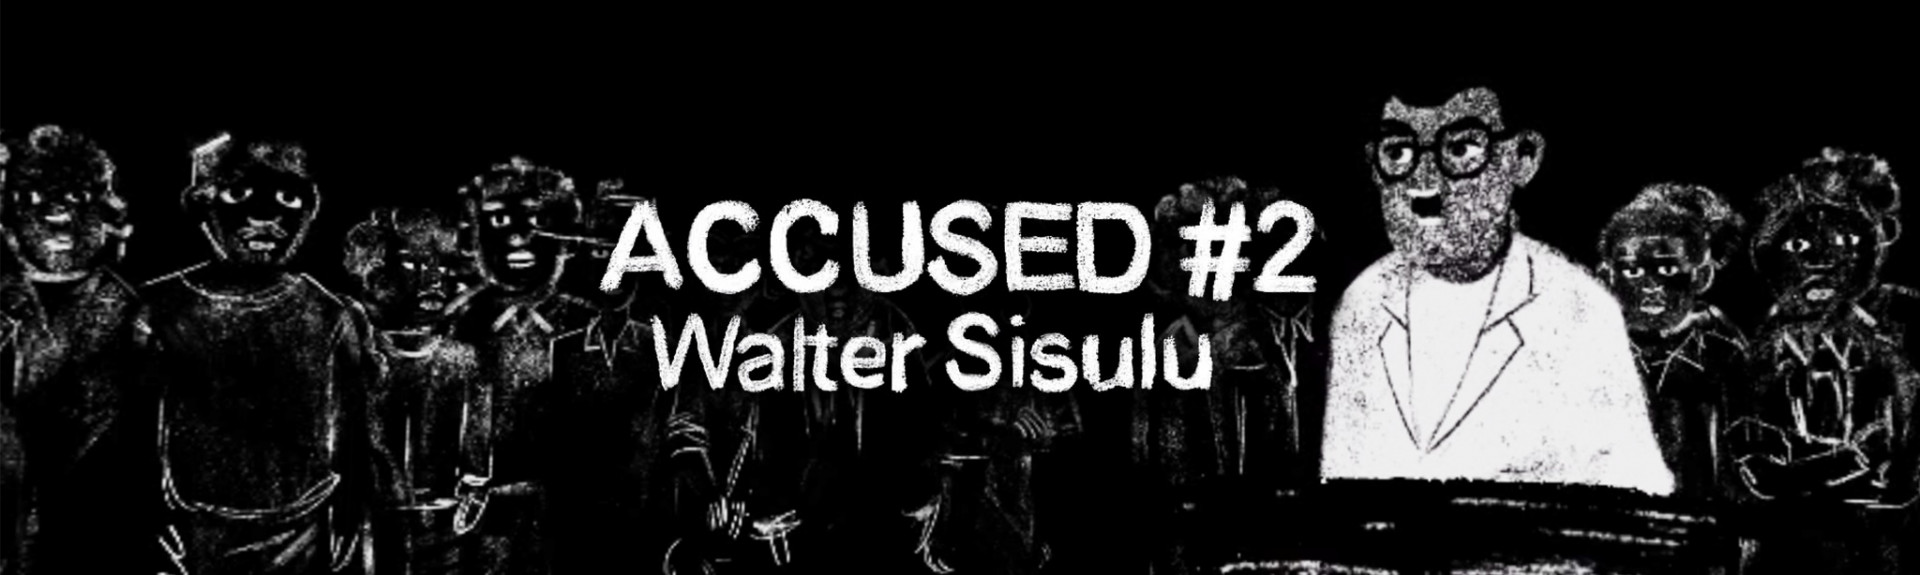 Accused #2 - Walter Sisulu